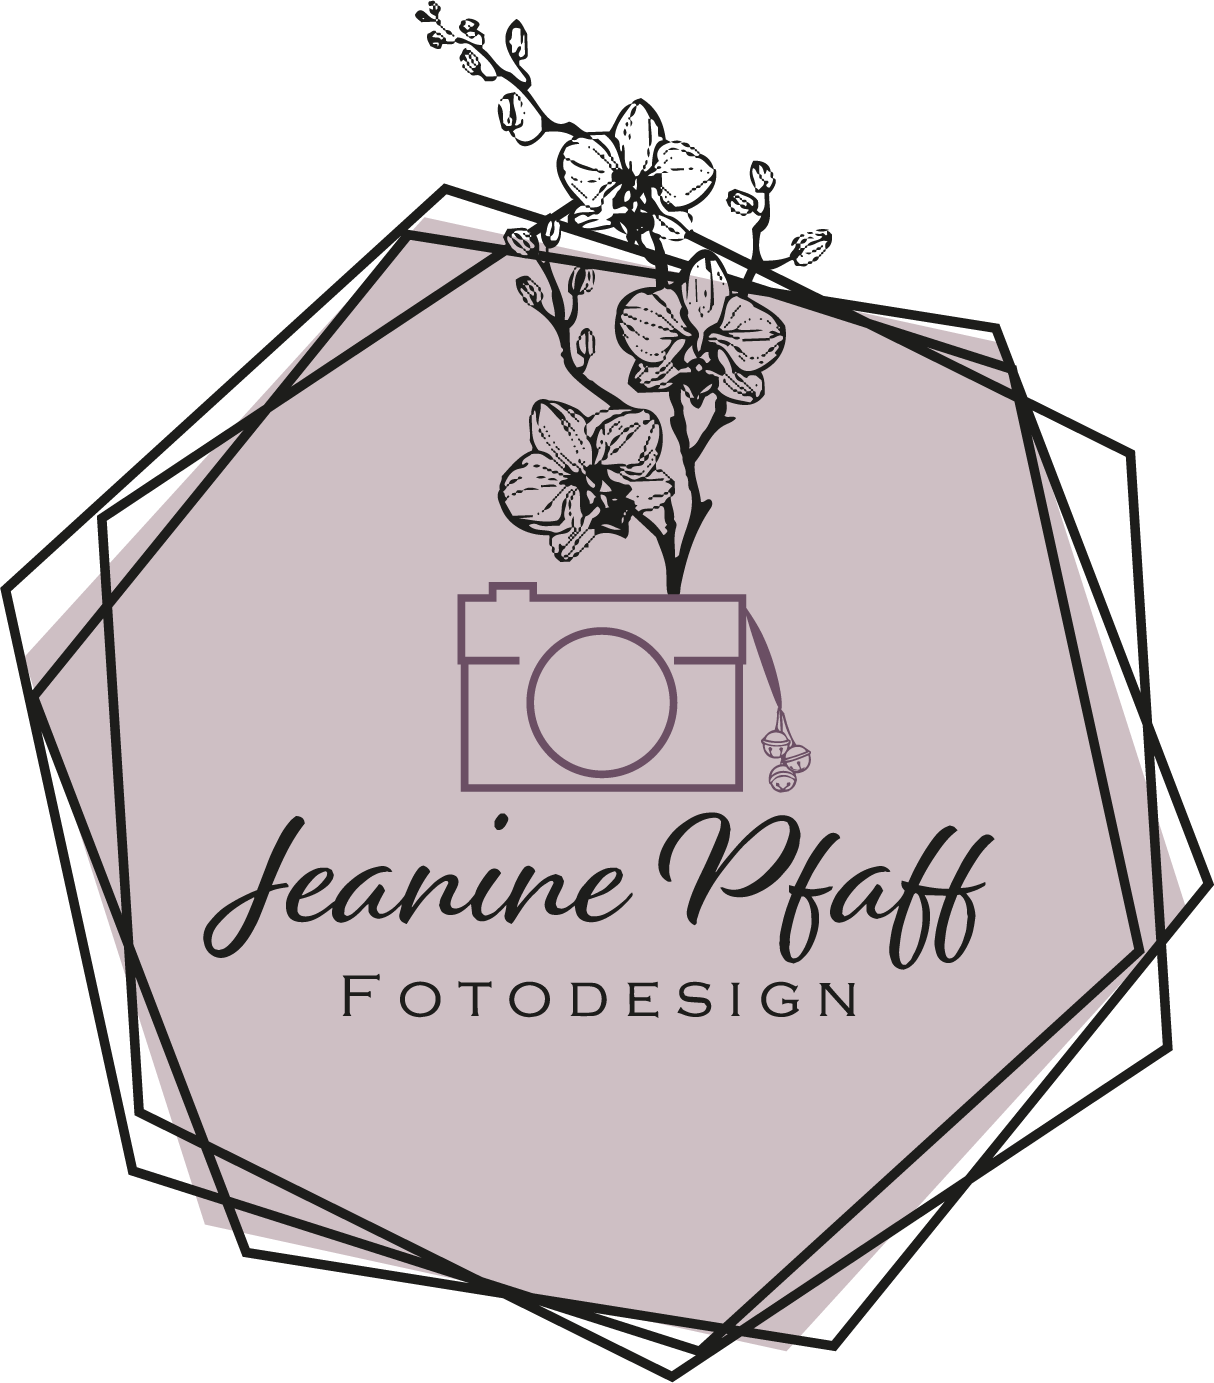 Jeanine Pfaff - Fotodesign